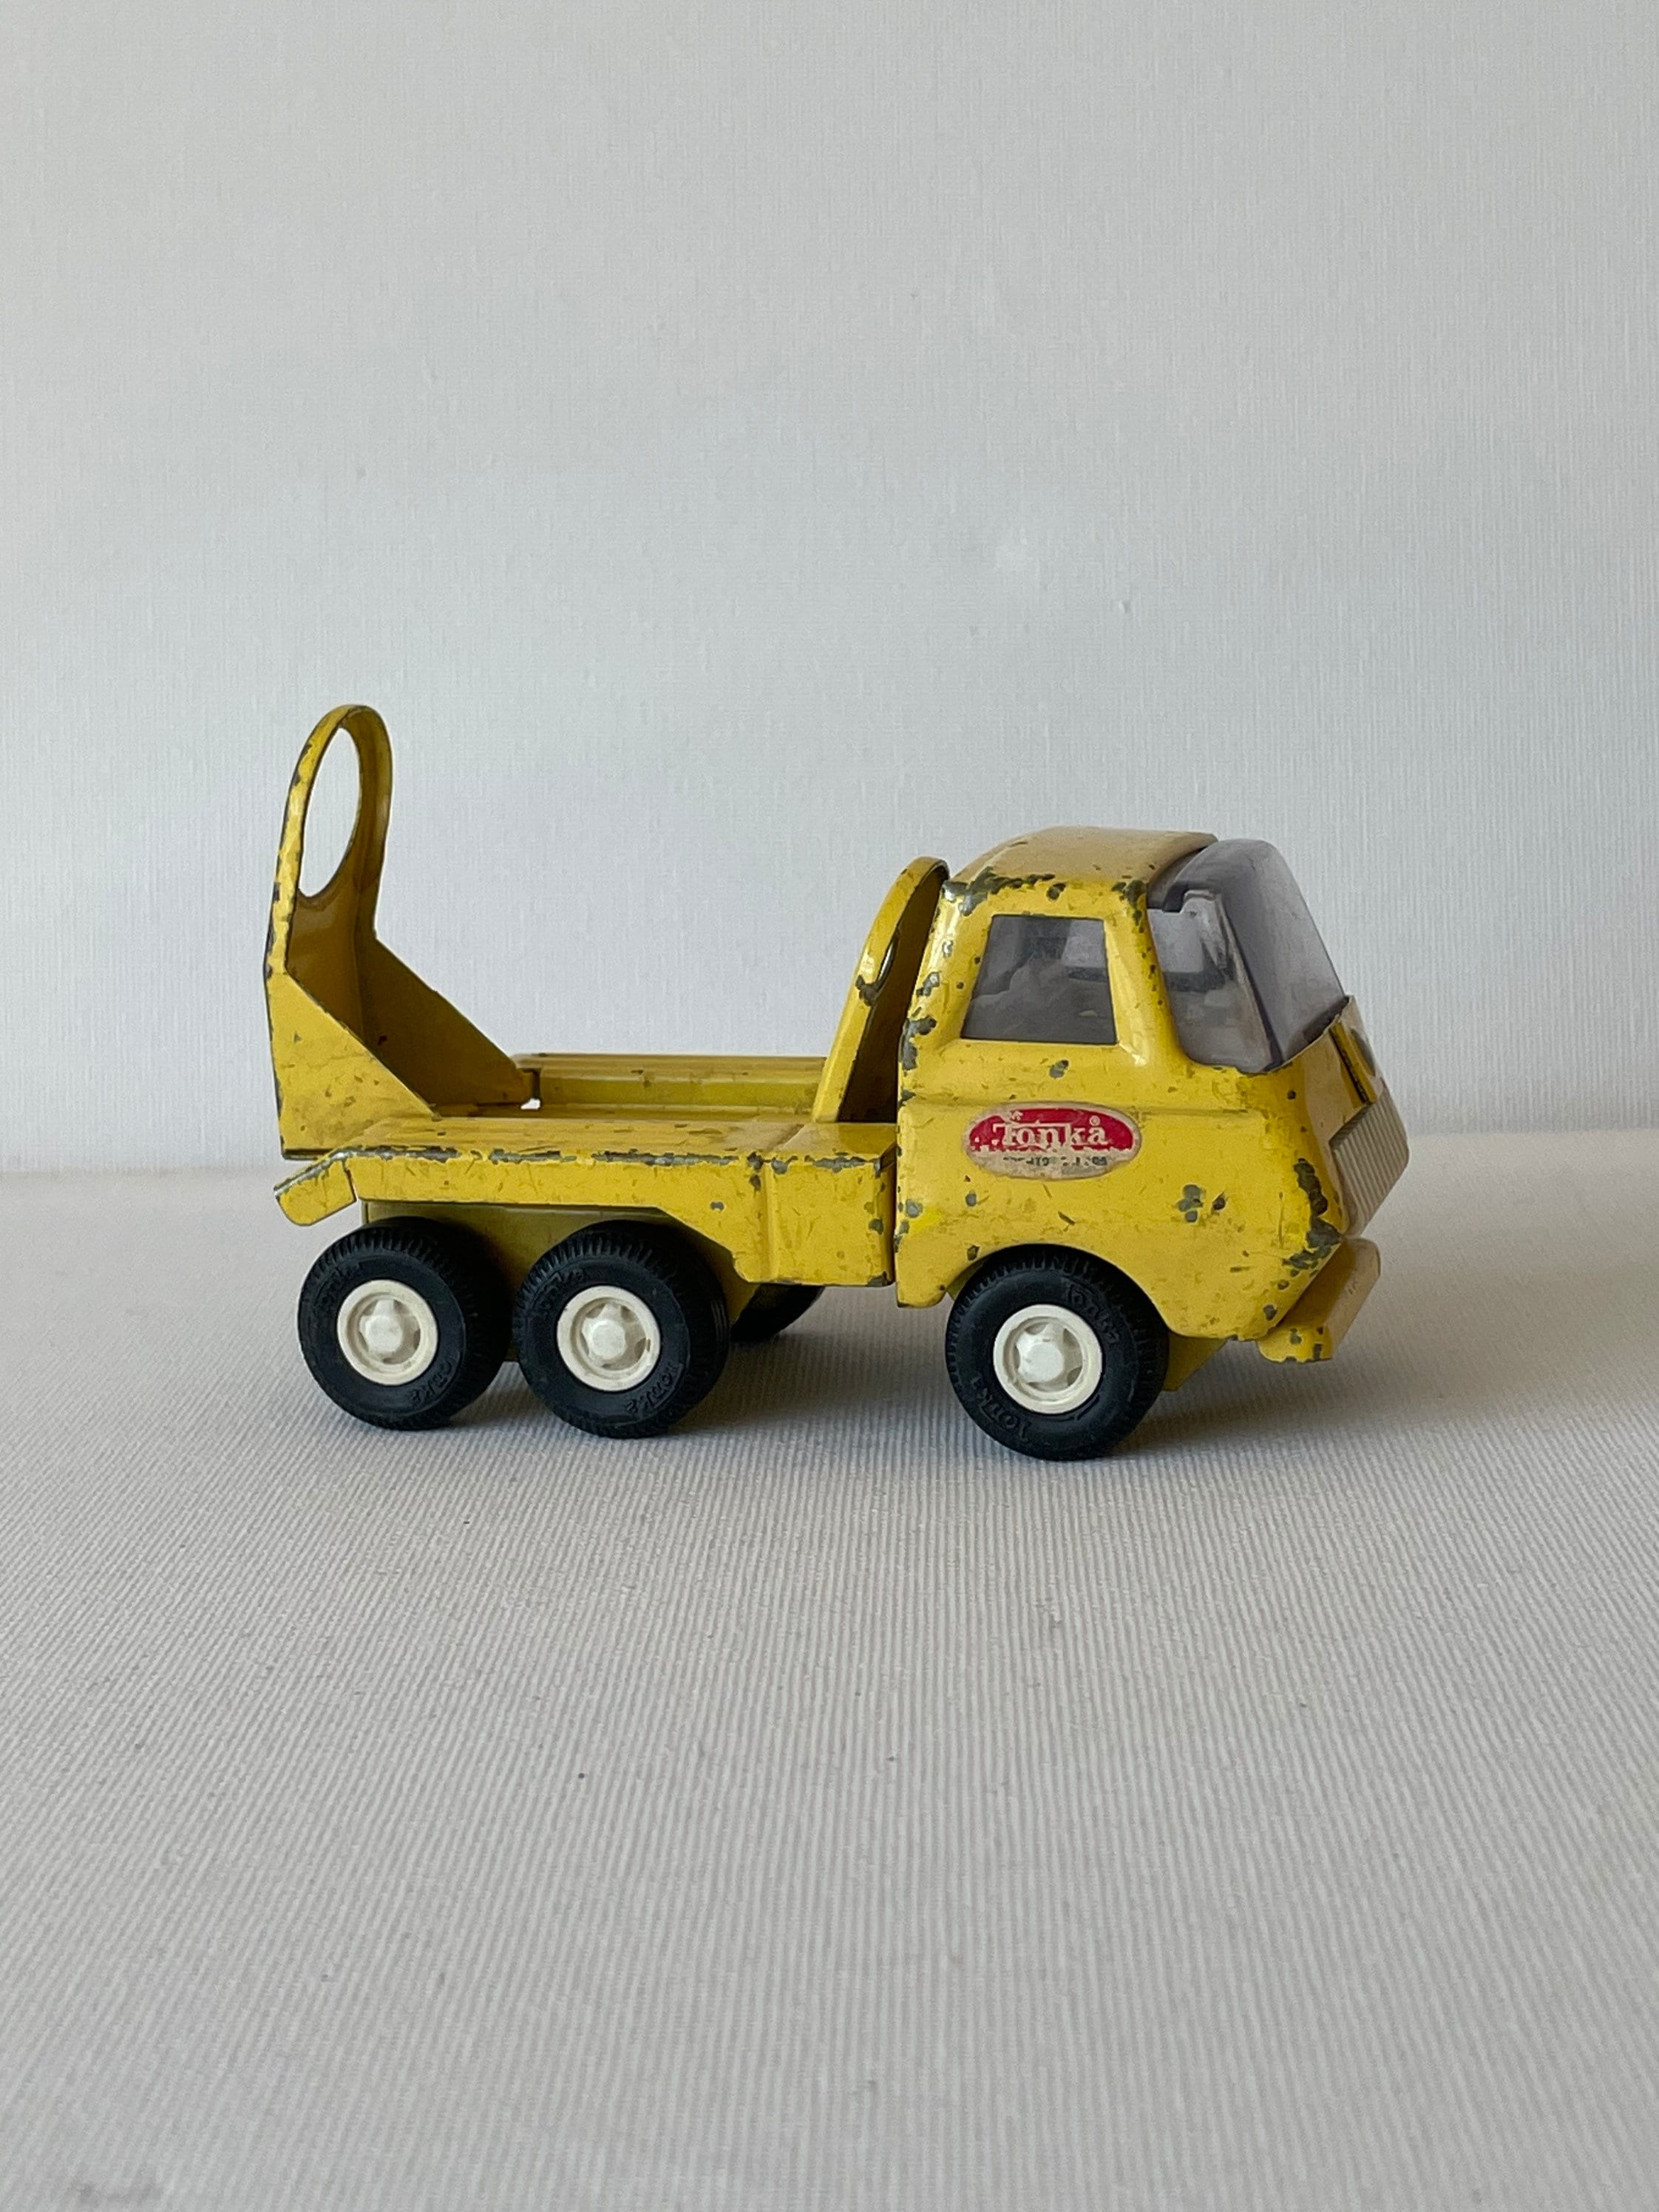 Antique Tonka métal camion jaune dump style camion vintage - Etsy Canada